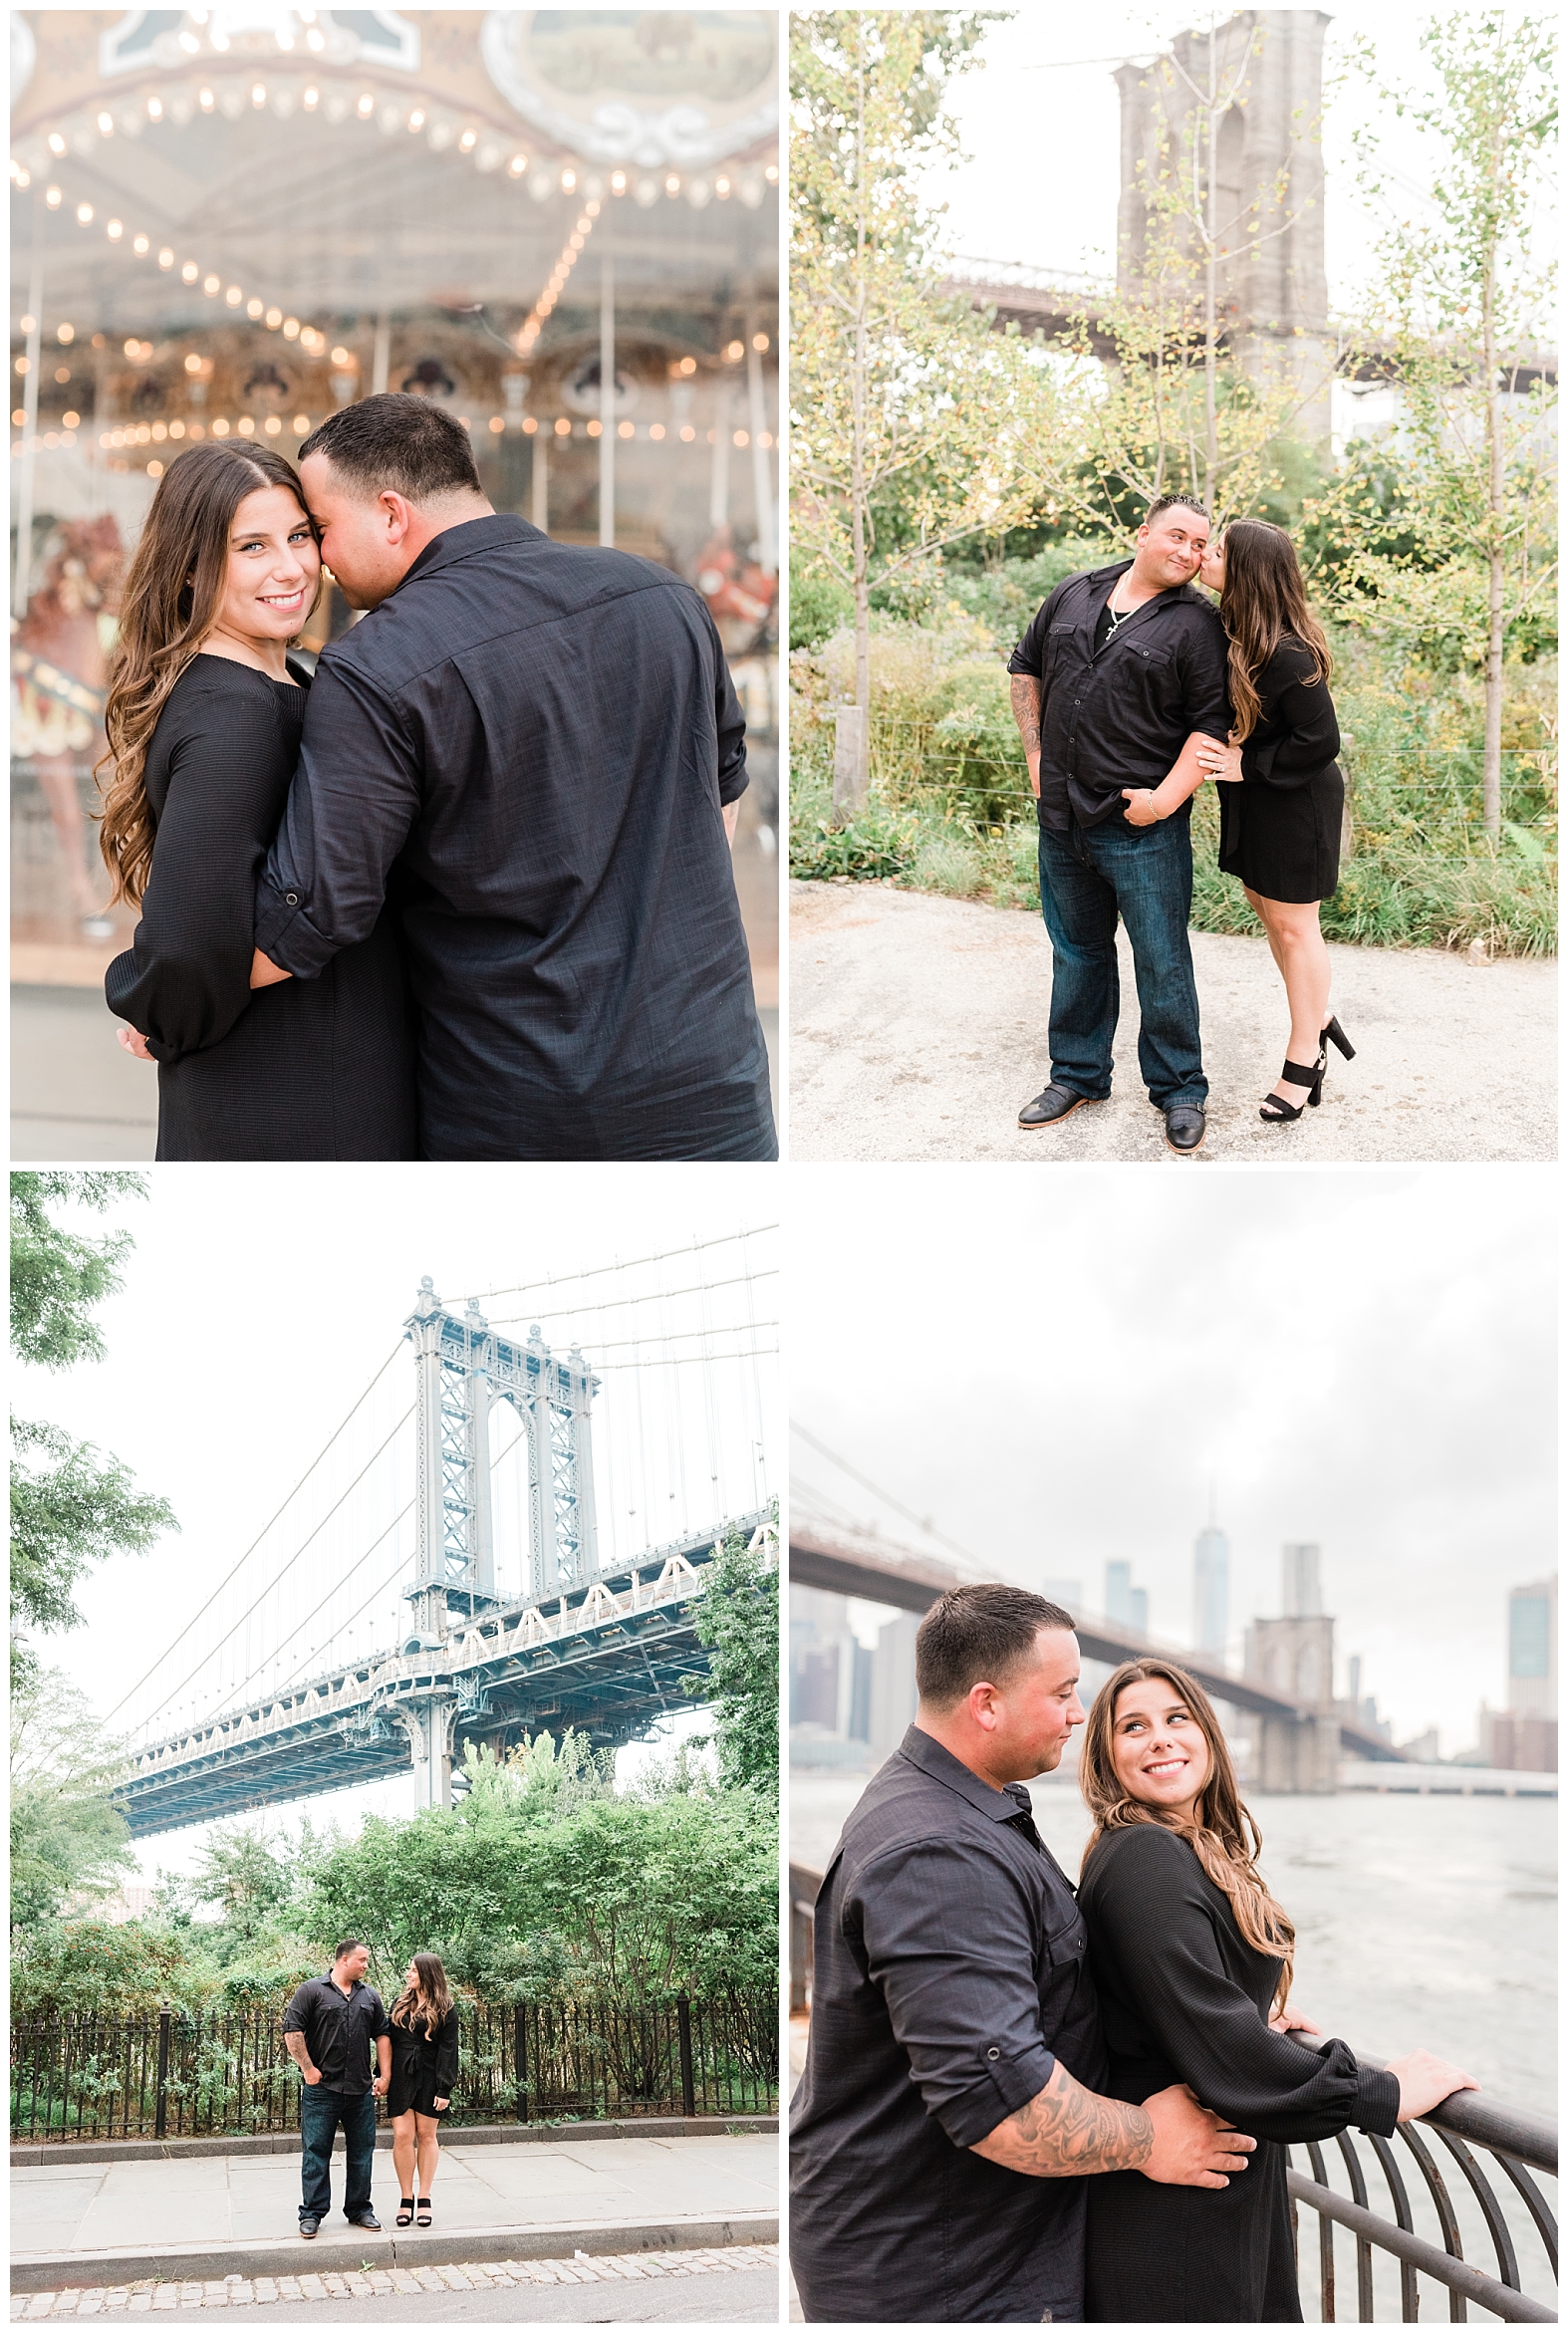 Brooklyn, Engagement Session, Carousel, Jane's Carousel, NYC, DUMBO, City, New York, Photographer, Photo, Manhattan Bridge, Skyline, Brooklyn Bridge